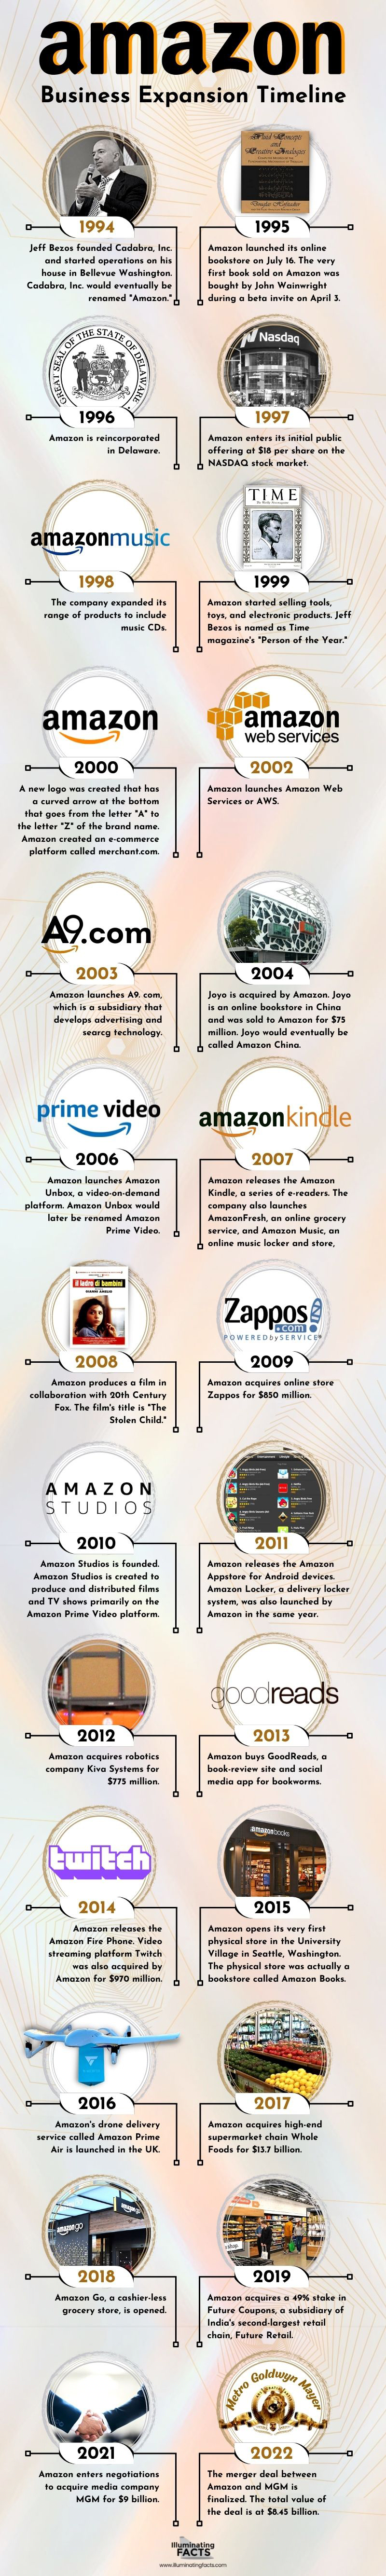 Amazon Business Expansion Timeline